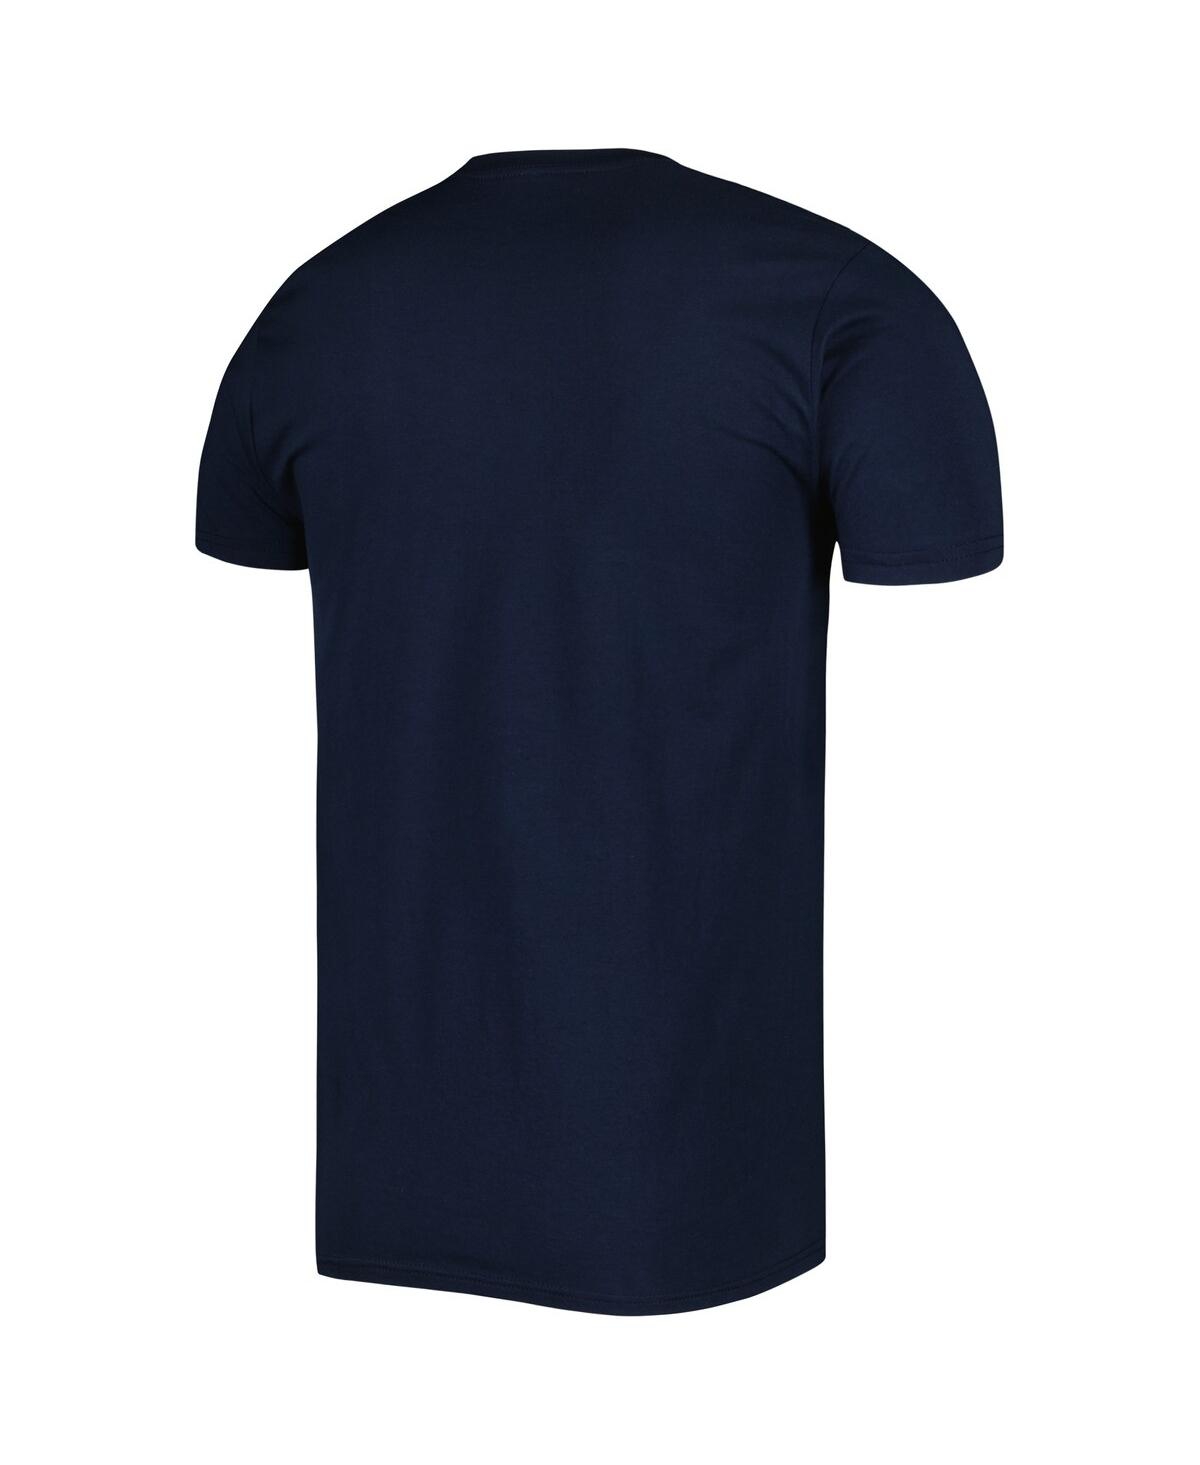 Shop Mitchell & Ness Men's  Navy Nashville Sc Serape T-shirt